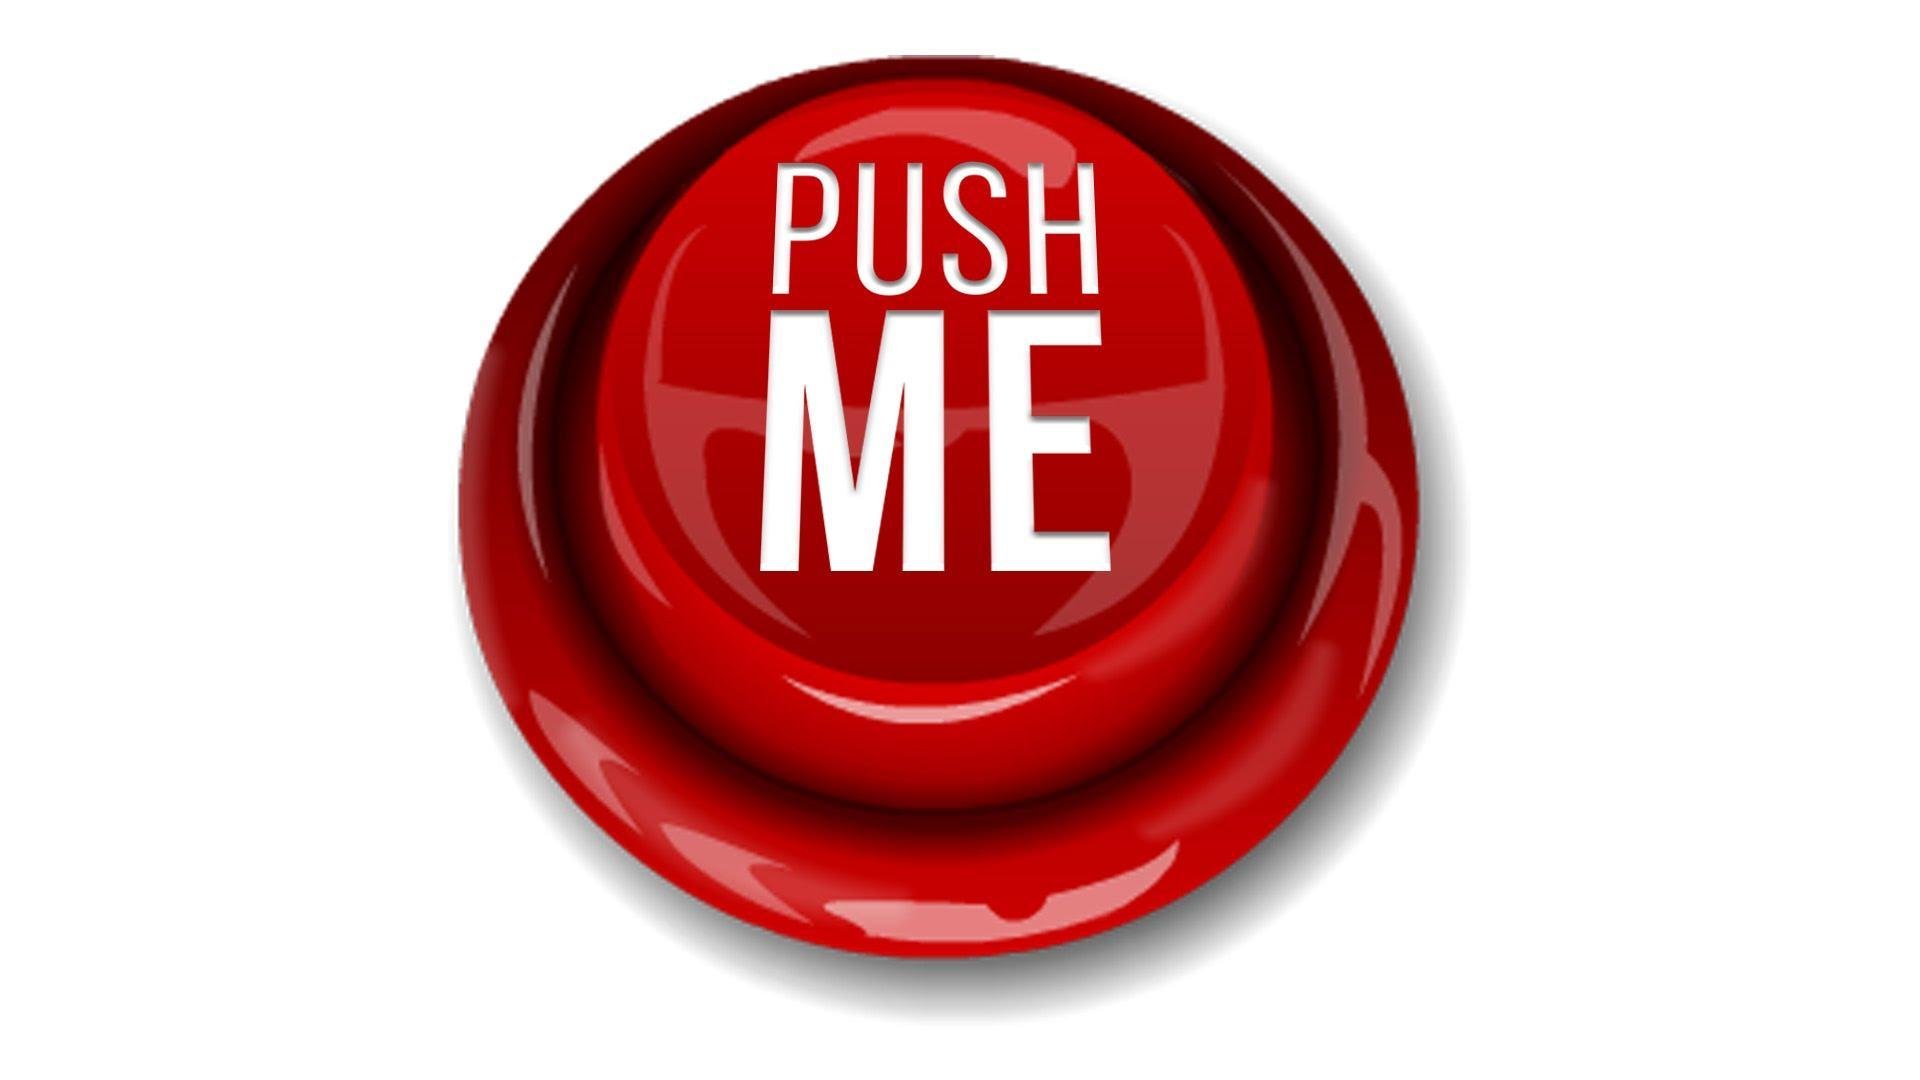 Кнопка пуск красная. Кнопка Push. Красная кнопка. Push me кнопка. Красная кнопка старт.